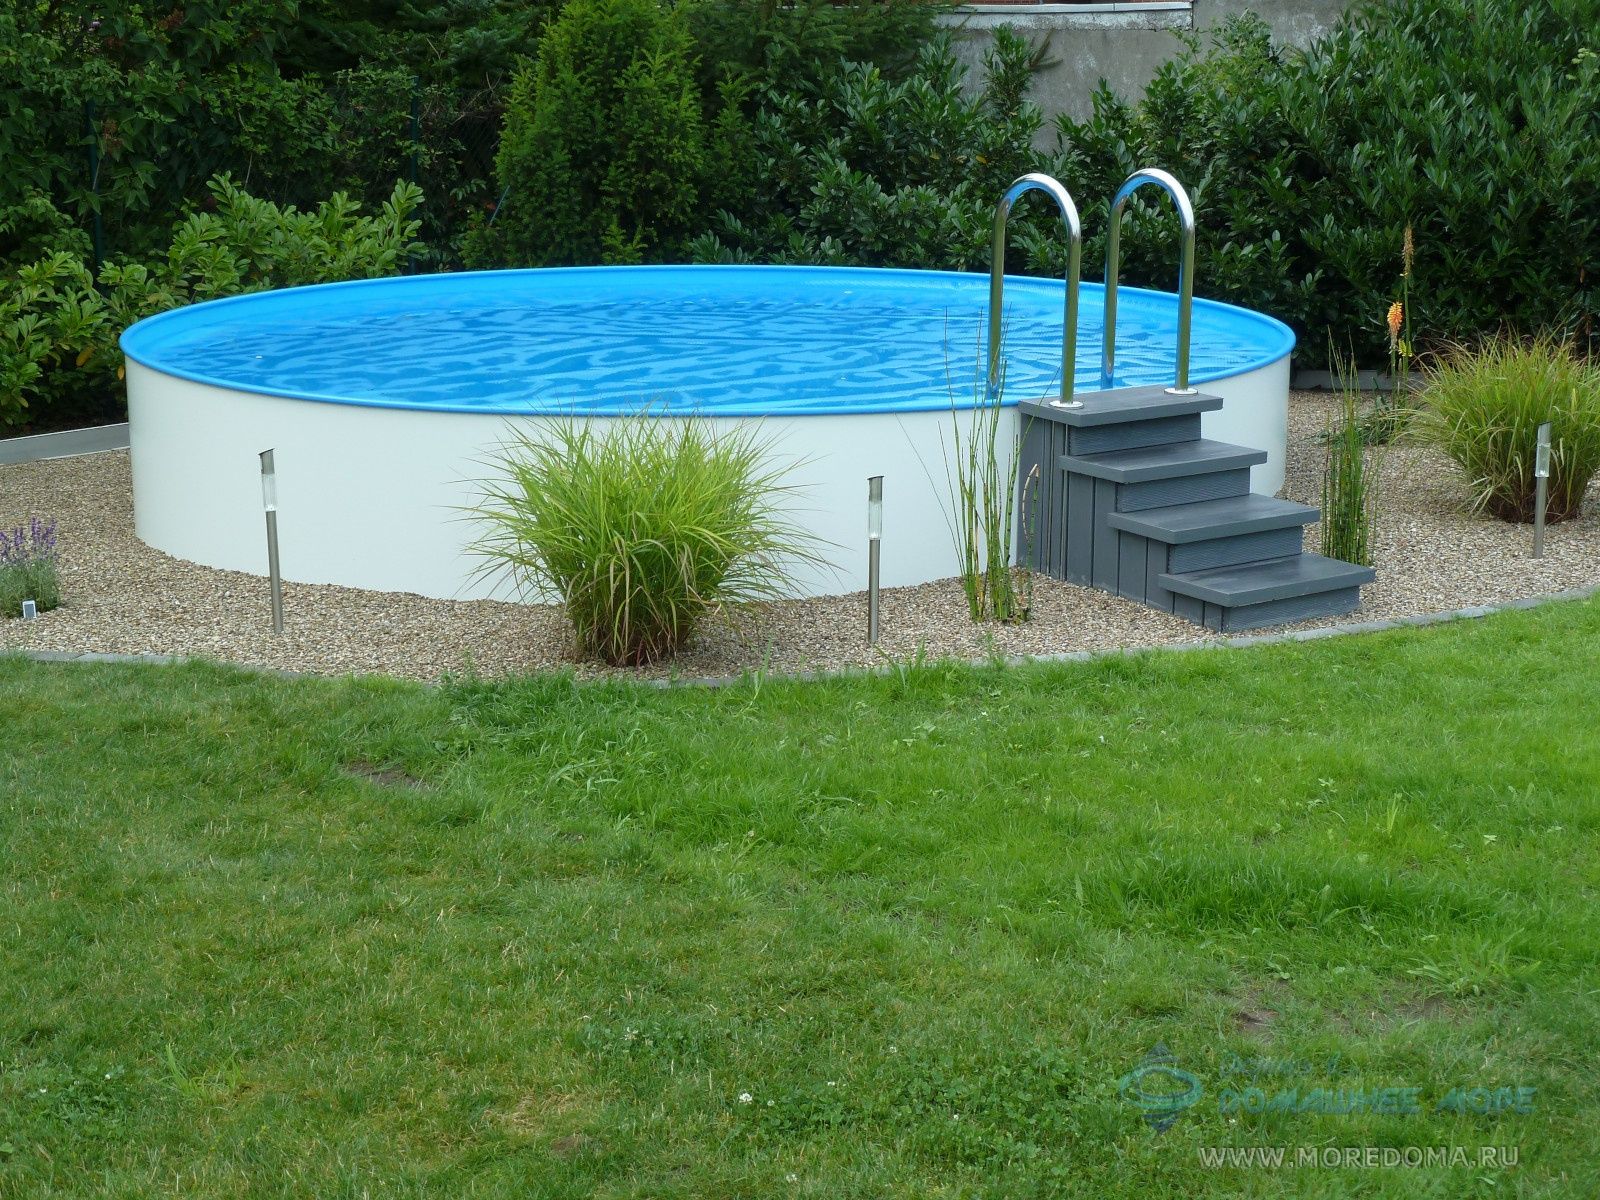 501010139-KB Каркасный бассейн Summer Fun (круг) 4,2 х 1,5м, арт. 501010139-KB диаметр 4.2 высота 1.5  